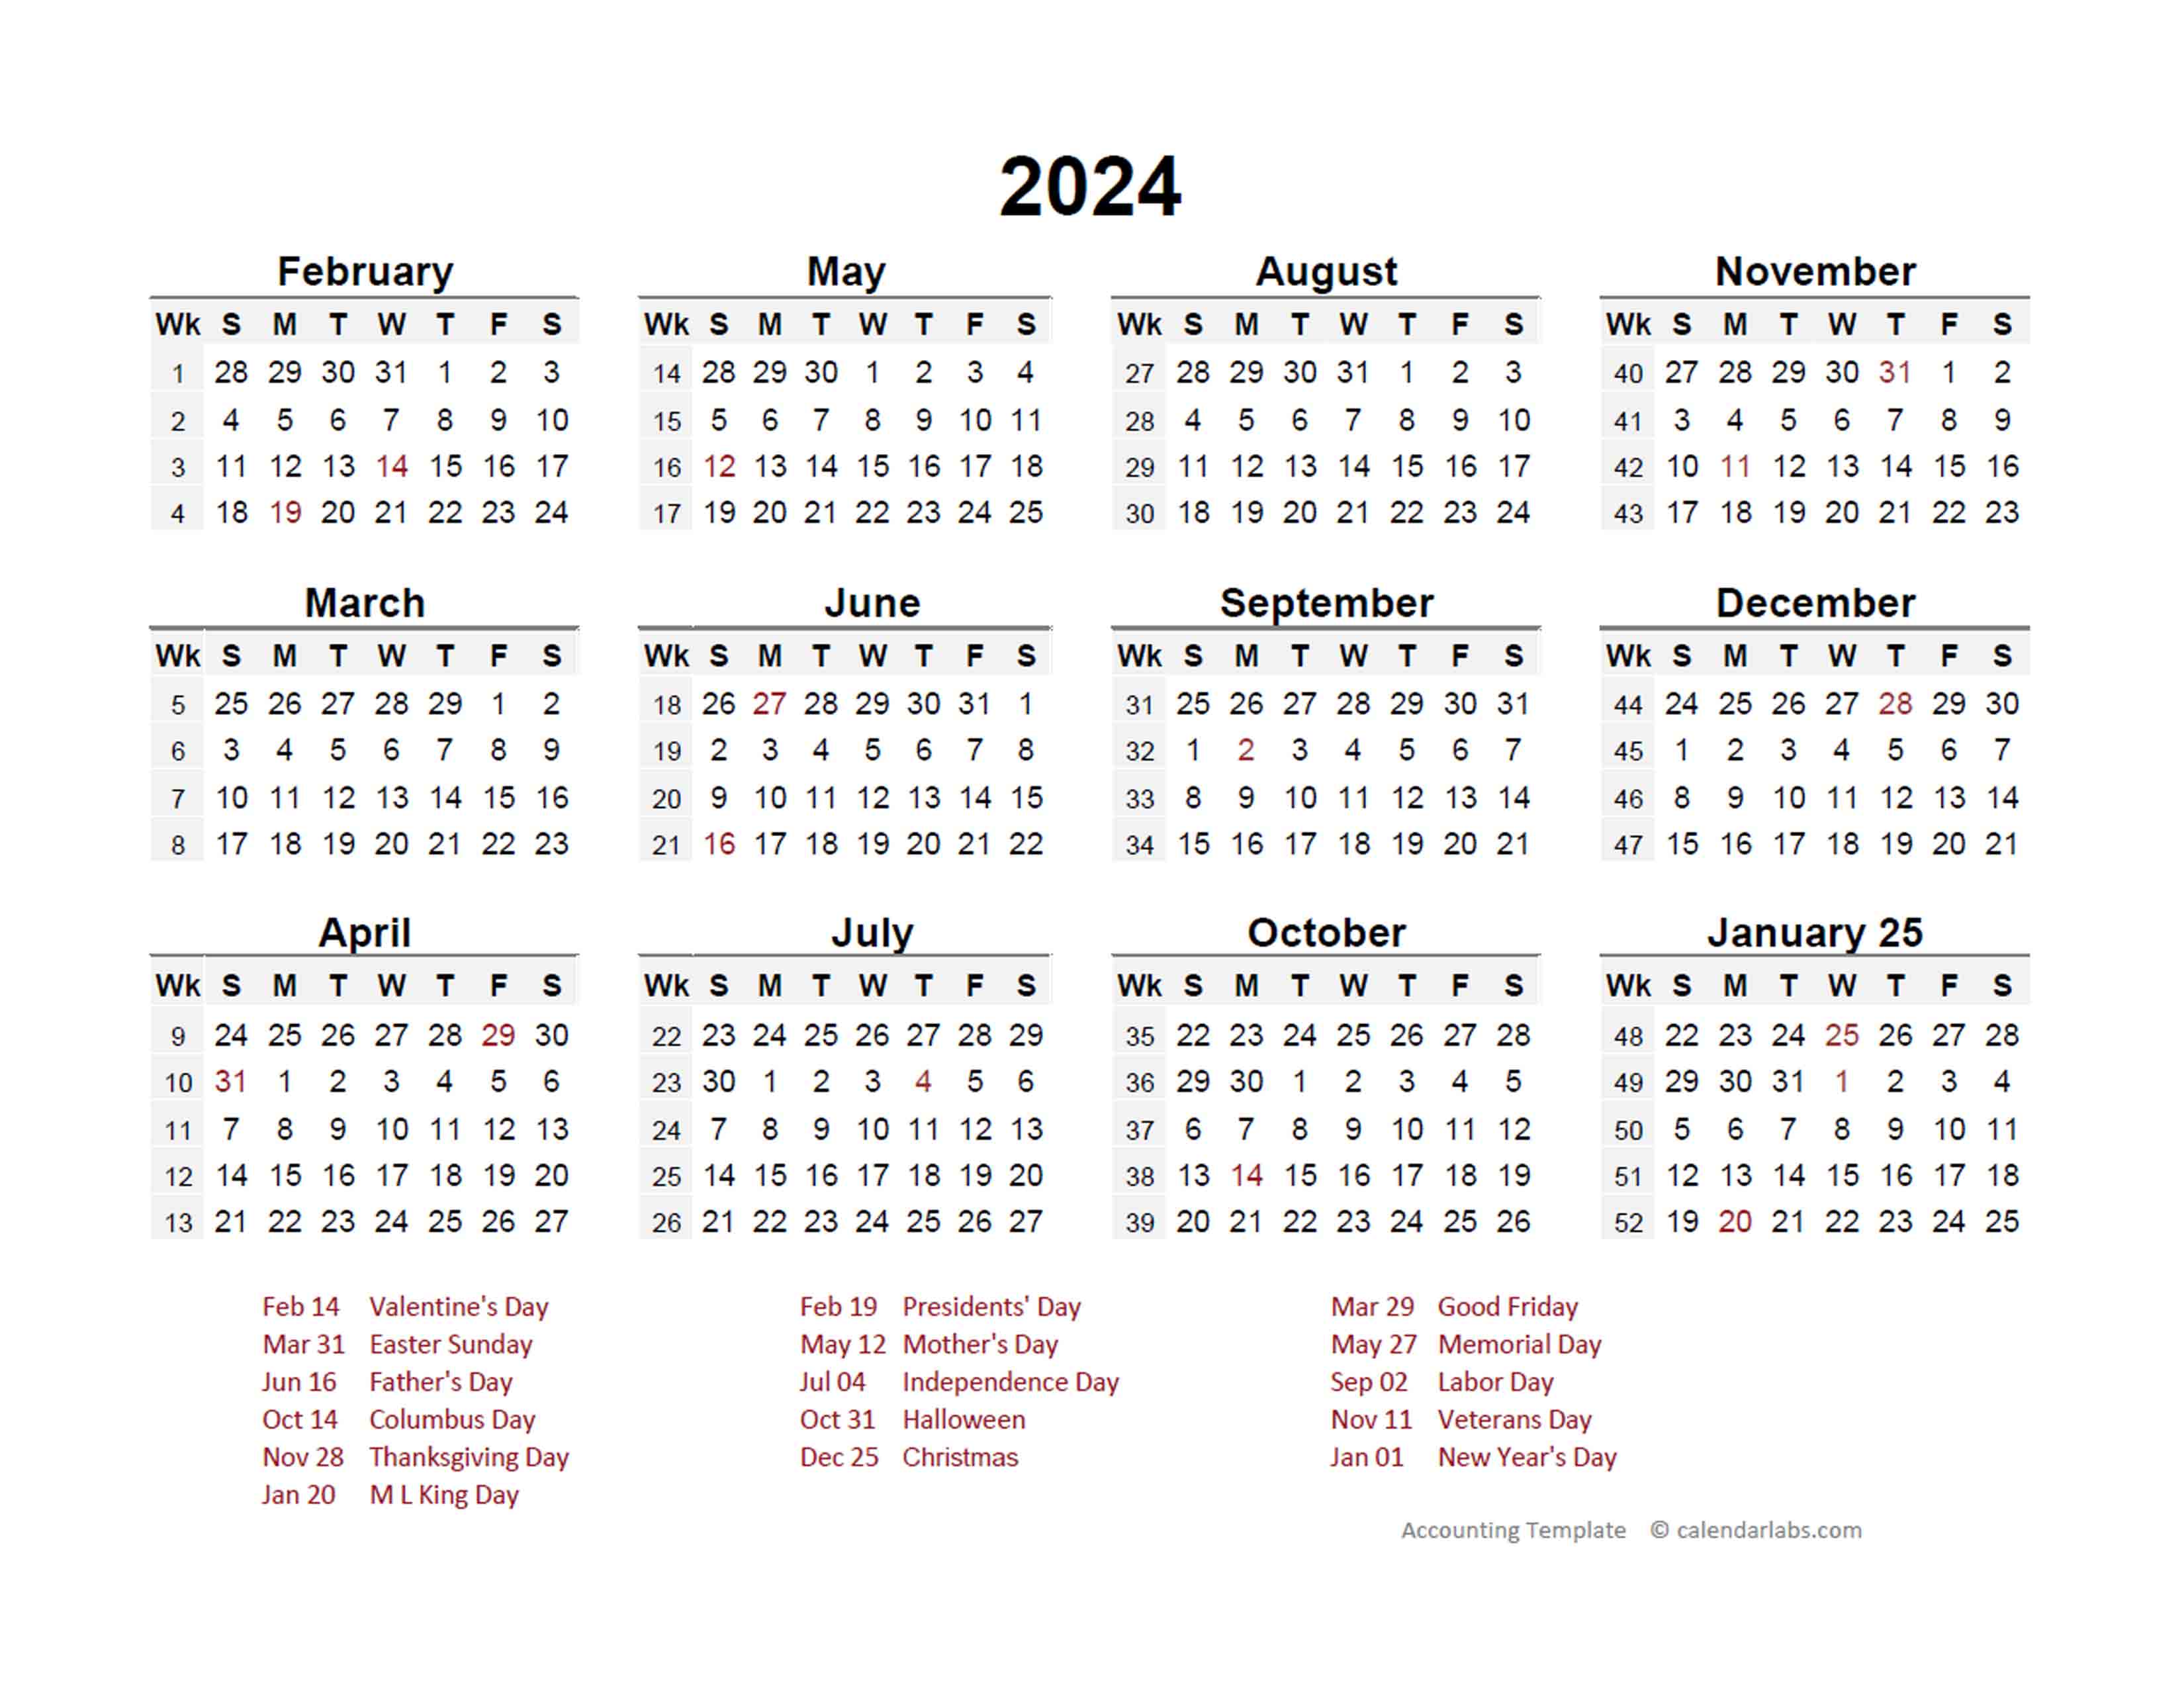 2024-accounting-period-calendar-4-4-5-free-printable-templates